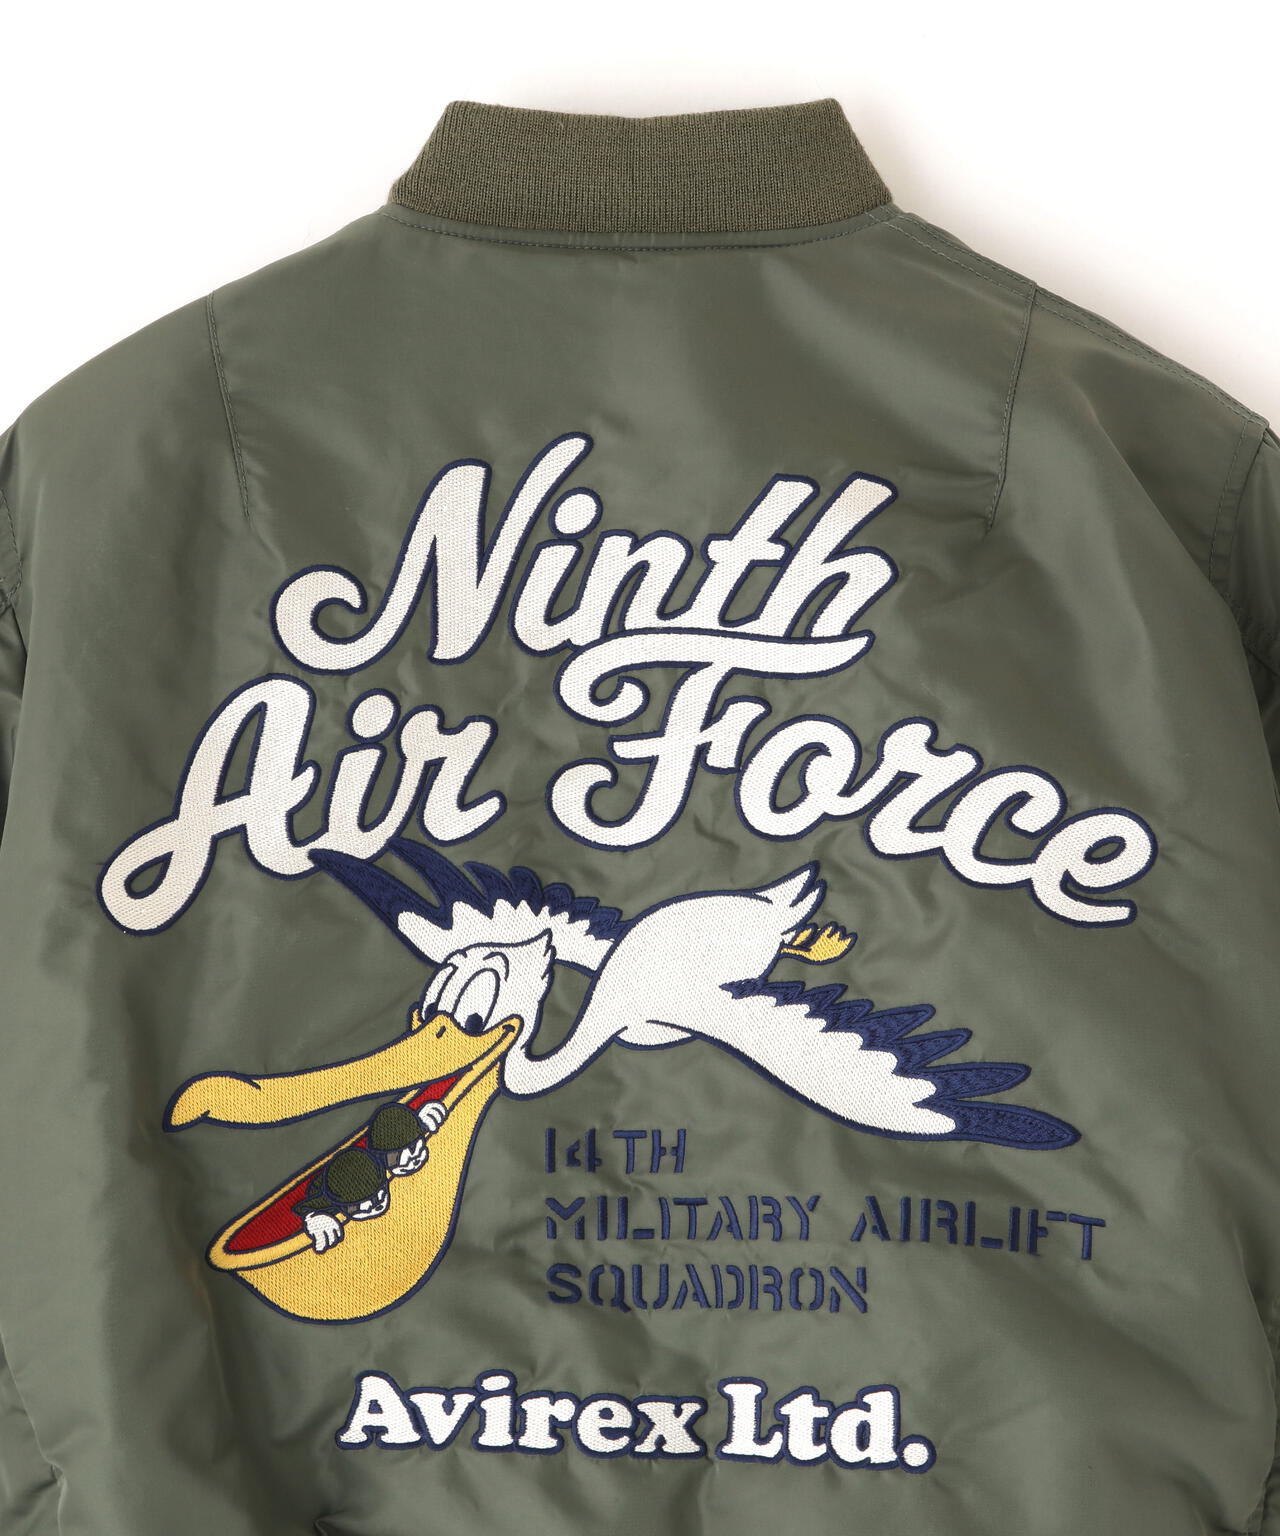 MA-1 9th AIR FORCE/MA-1 9th エアフォース